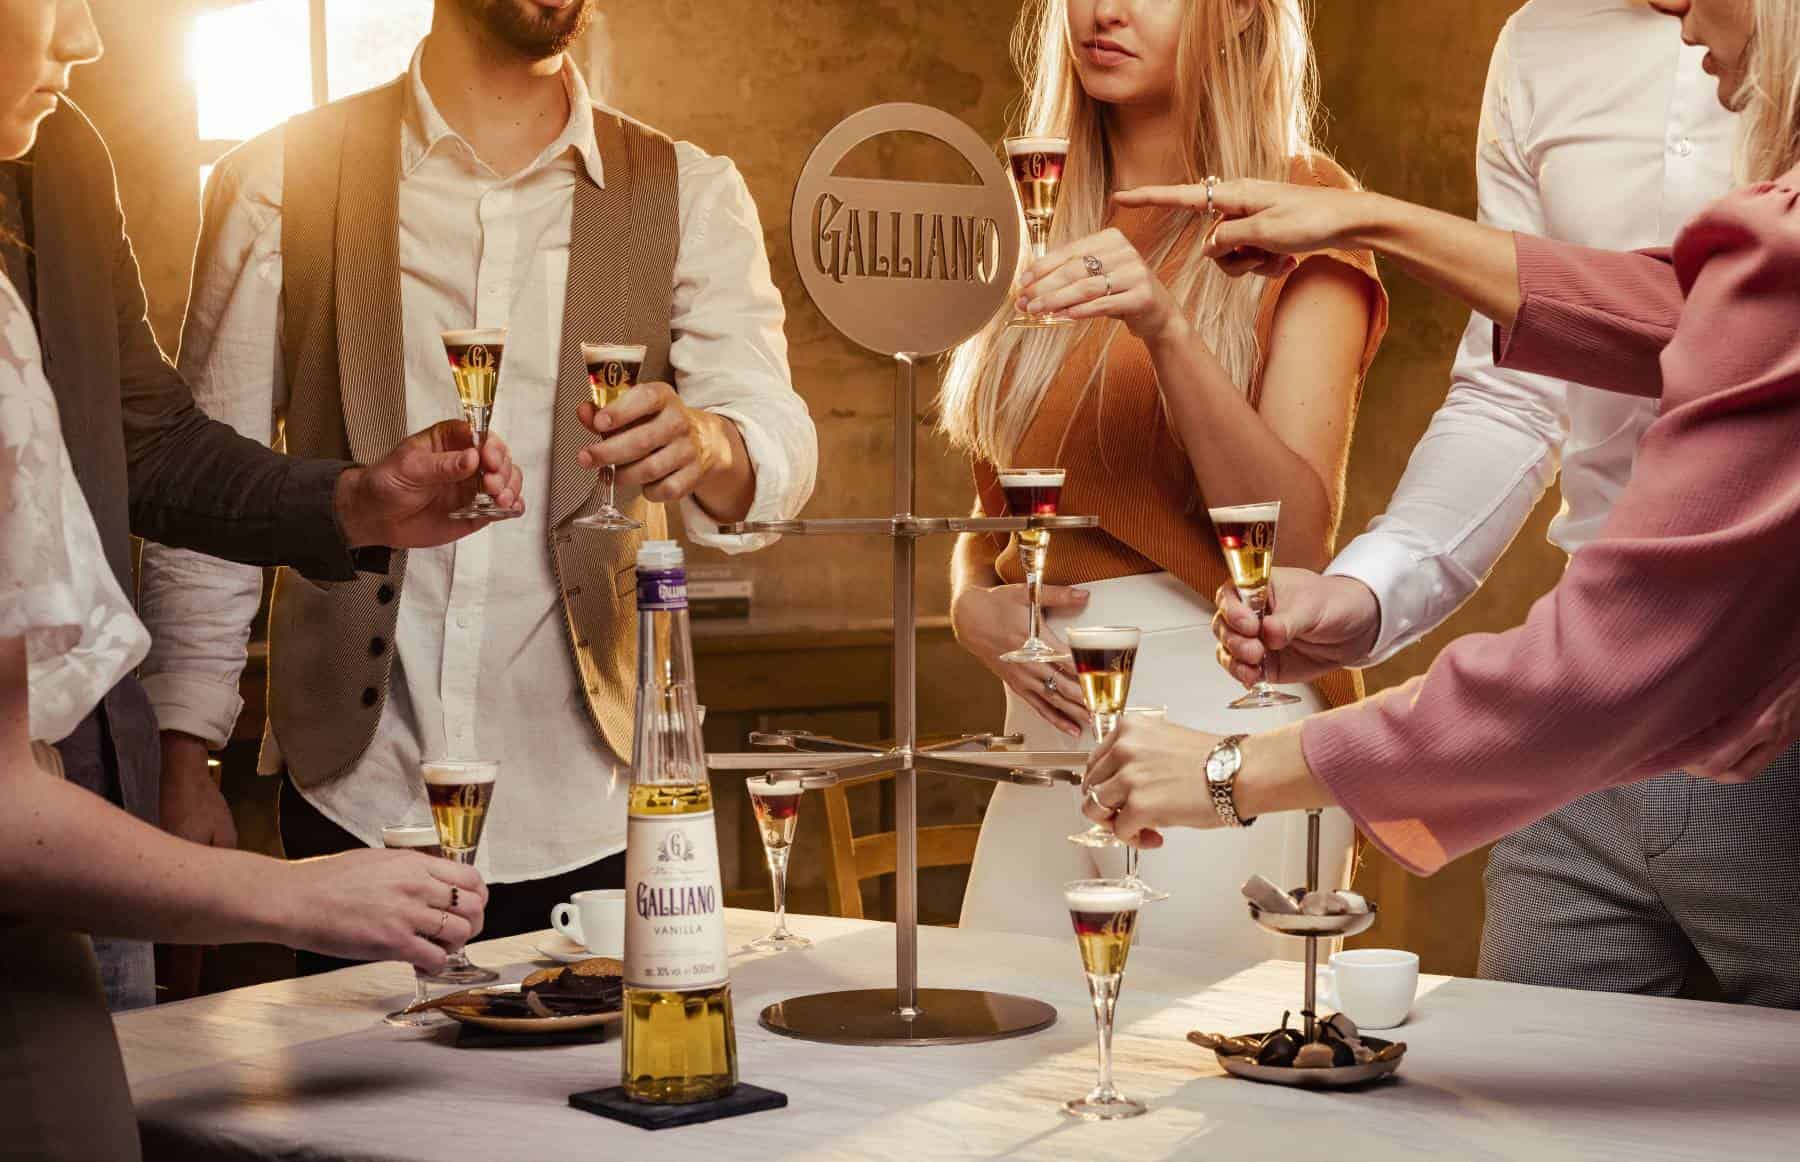 Galliano Vanilla liqueur and vanilla cocktails